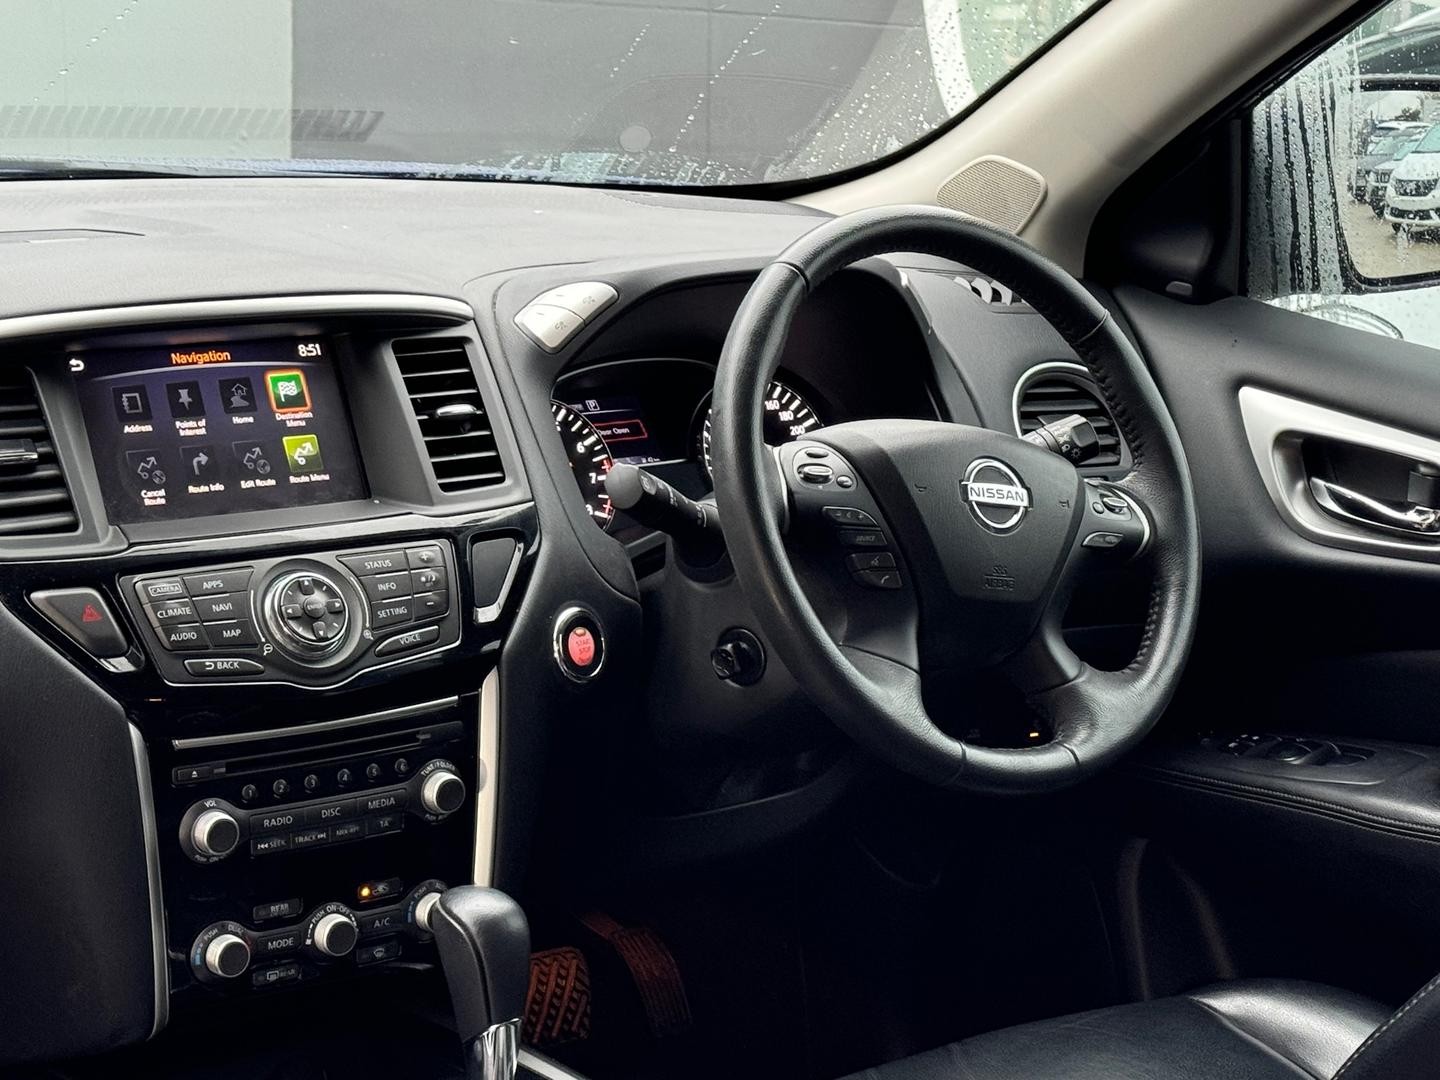 Nissan Pathfinder image 2